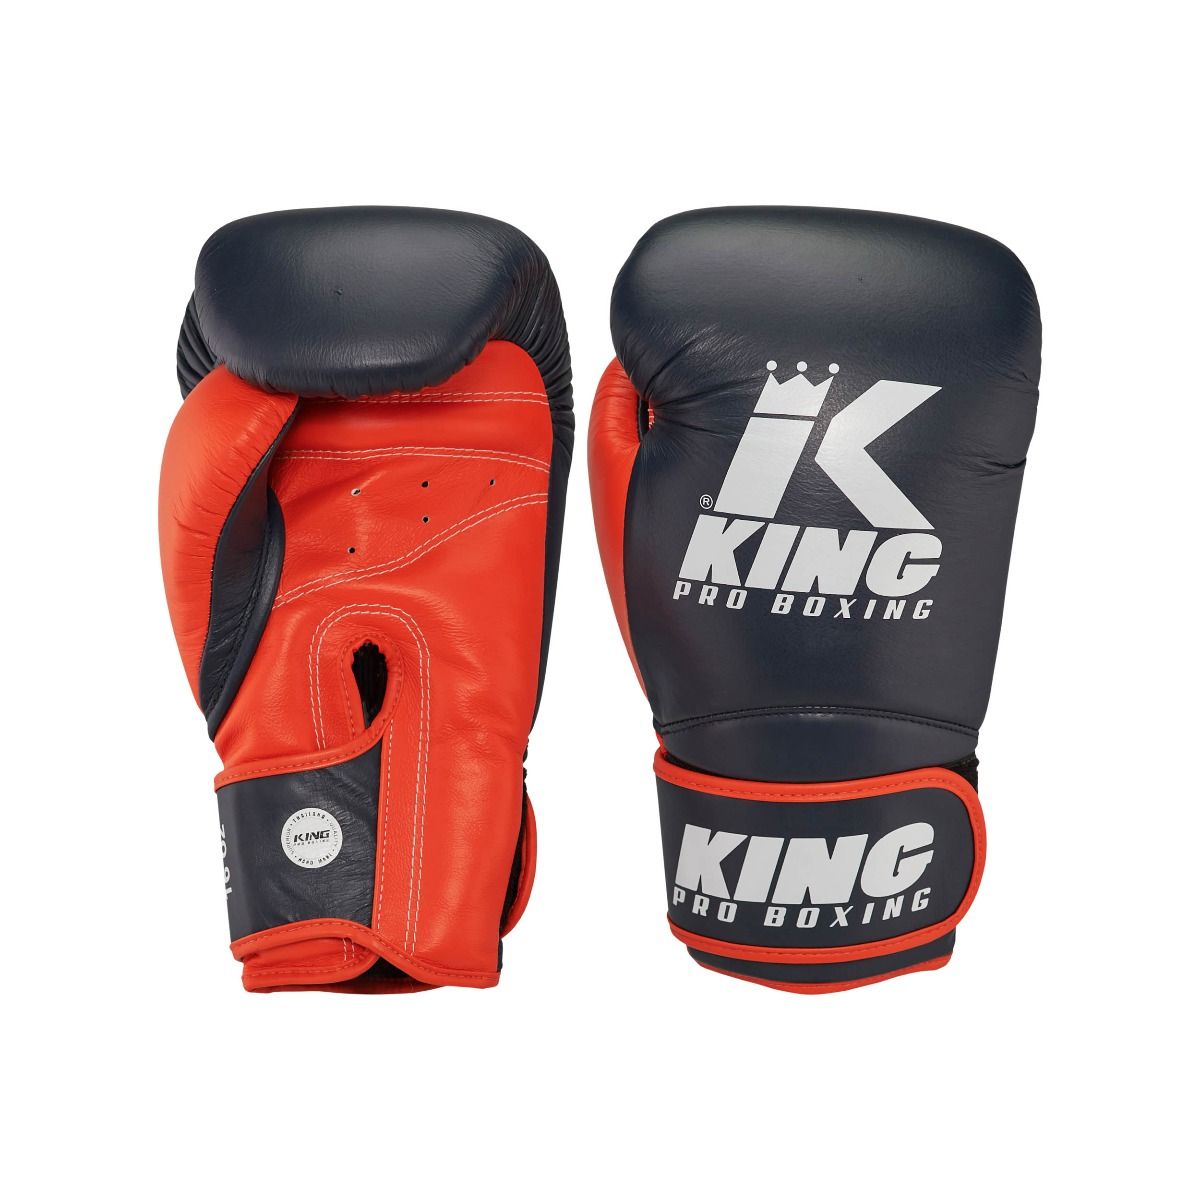 King Pro Boxing - Bokshandschoenen - STAR 15 - Zwart - Rood